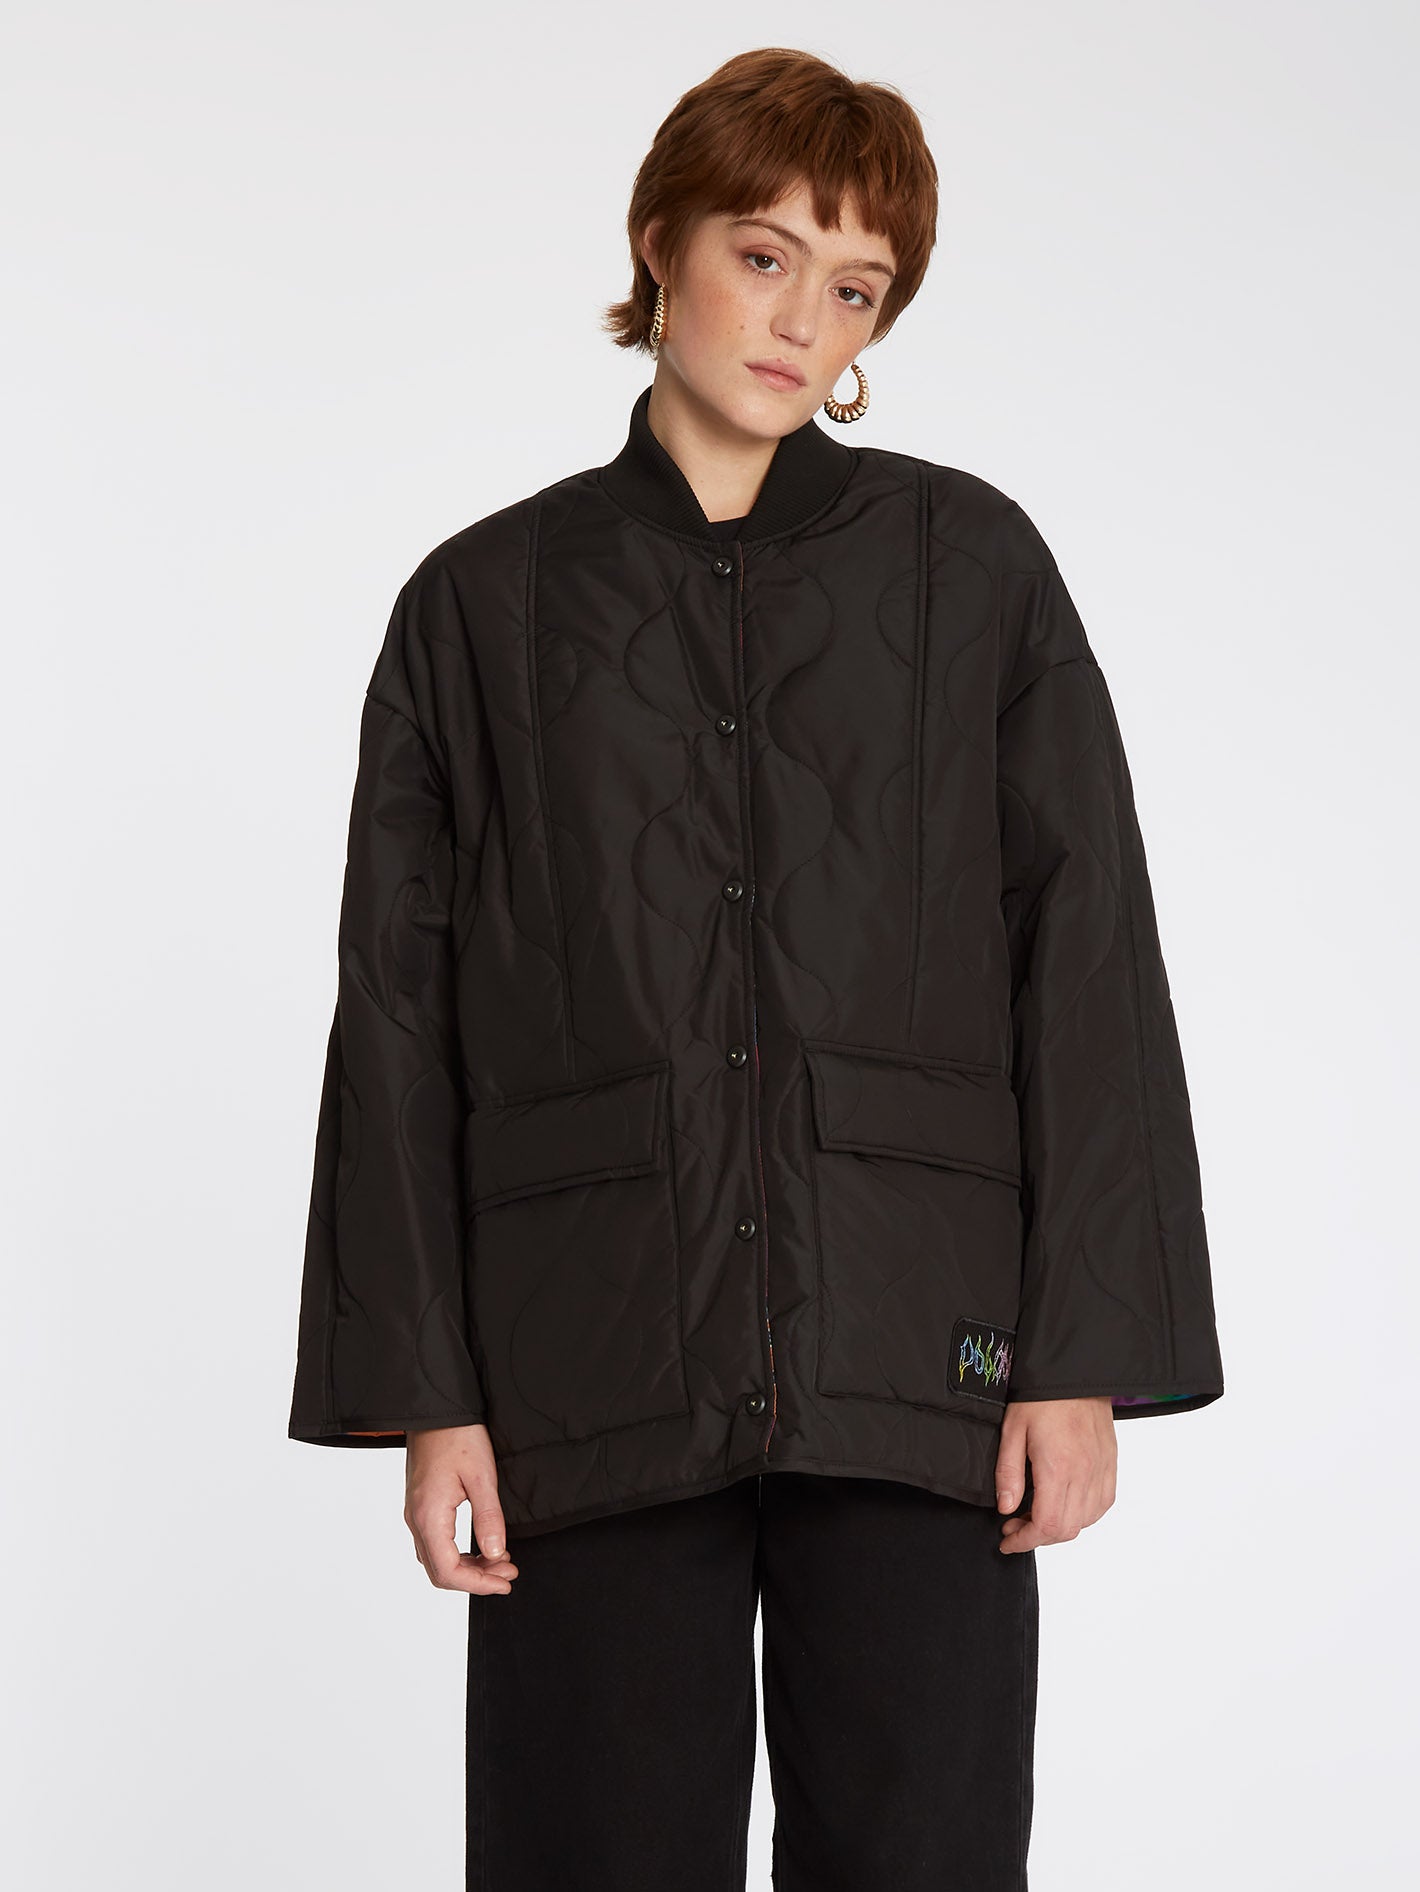 Chrissie Abbott X French Jacket (Reversible) - BLACK – Volcom Europe